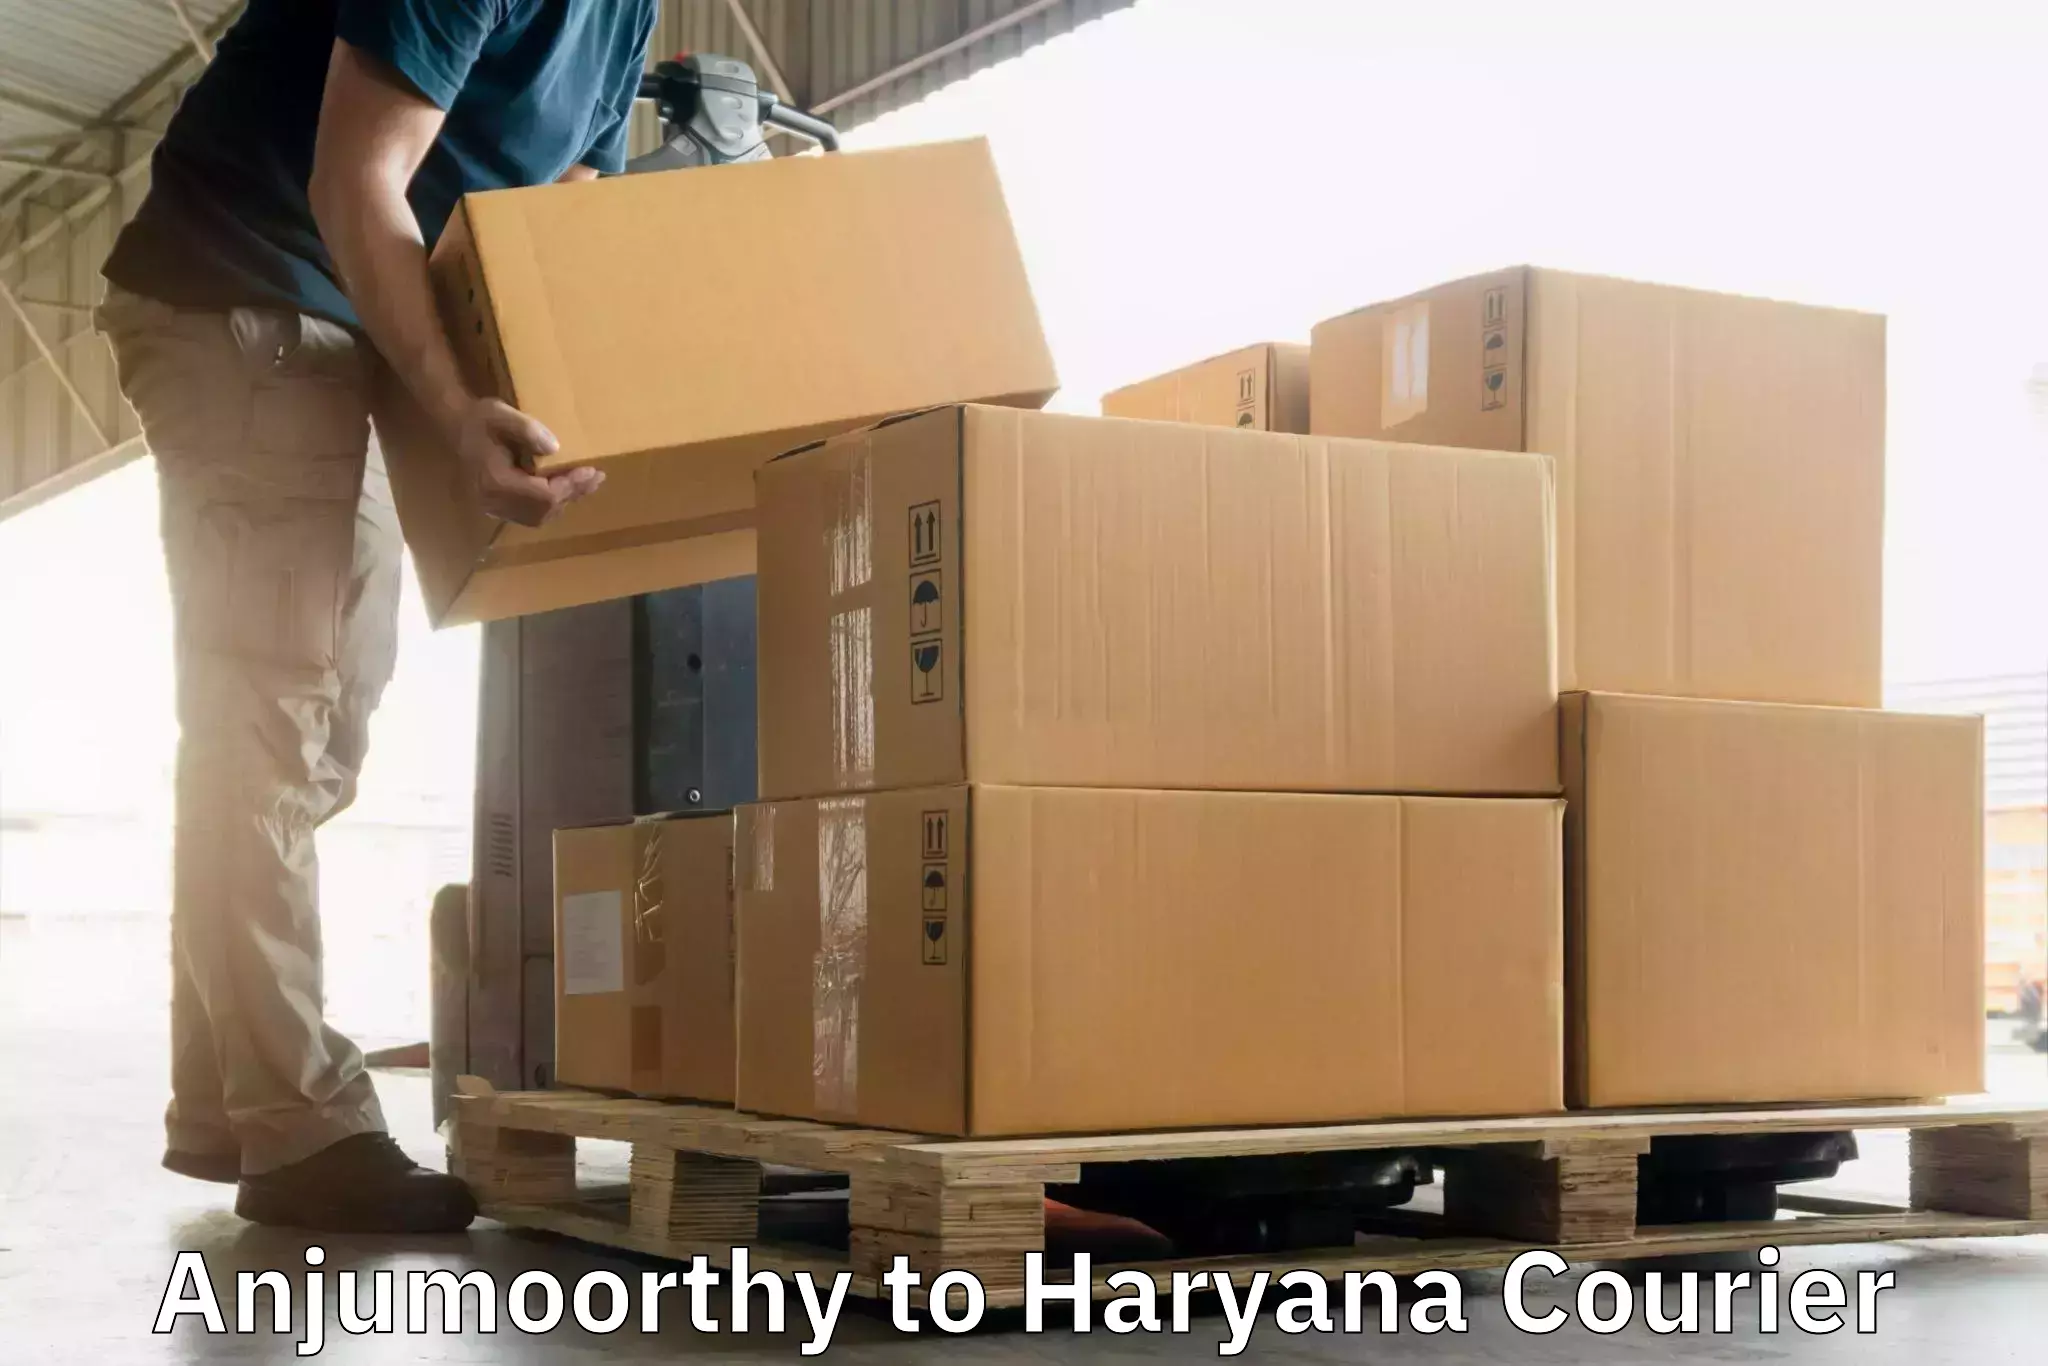 Package delivery network Anjumoorthy to Haryana